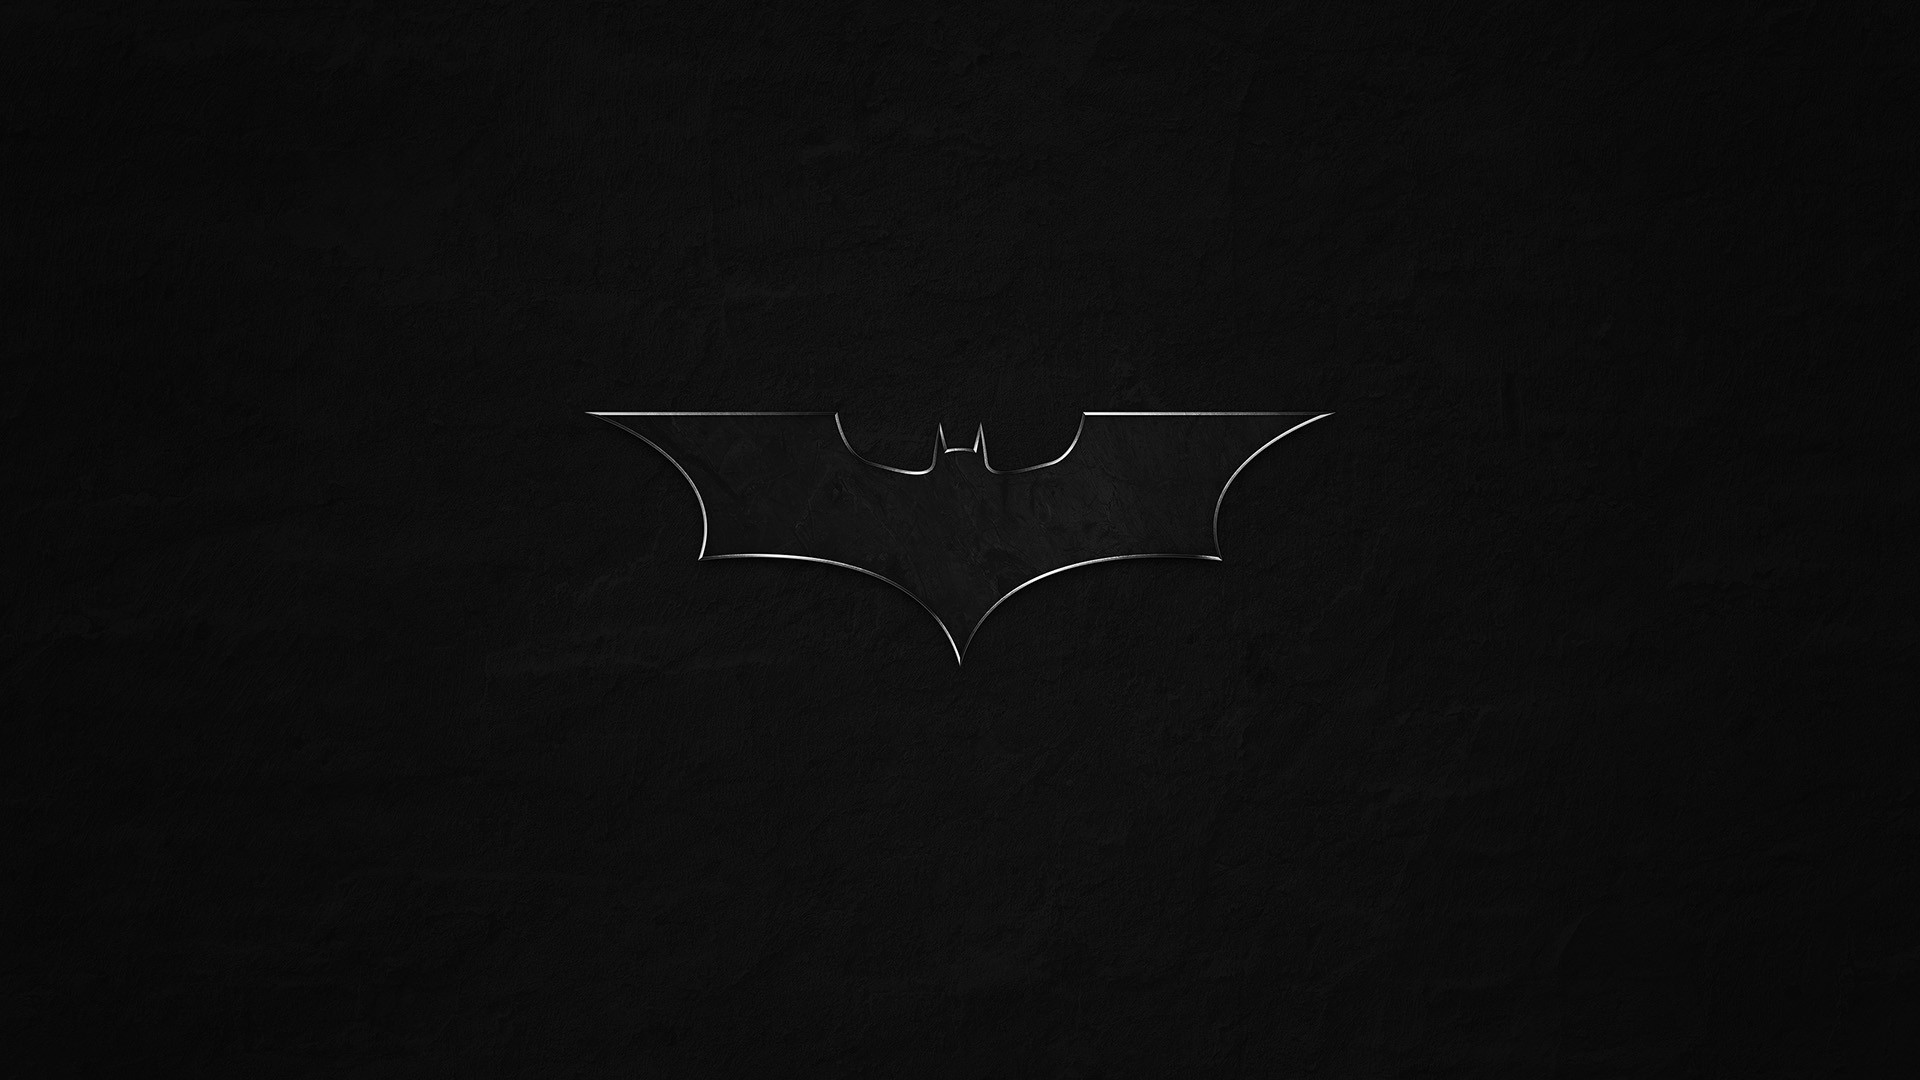 Batman Full HD Wallpaper and Background Image | 1920x1080 | ID:577678